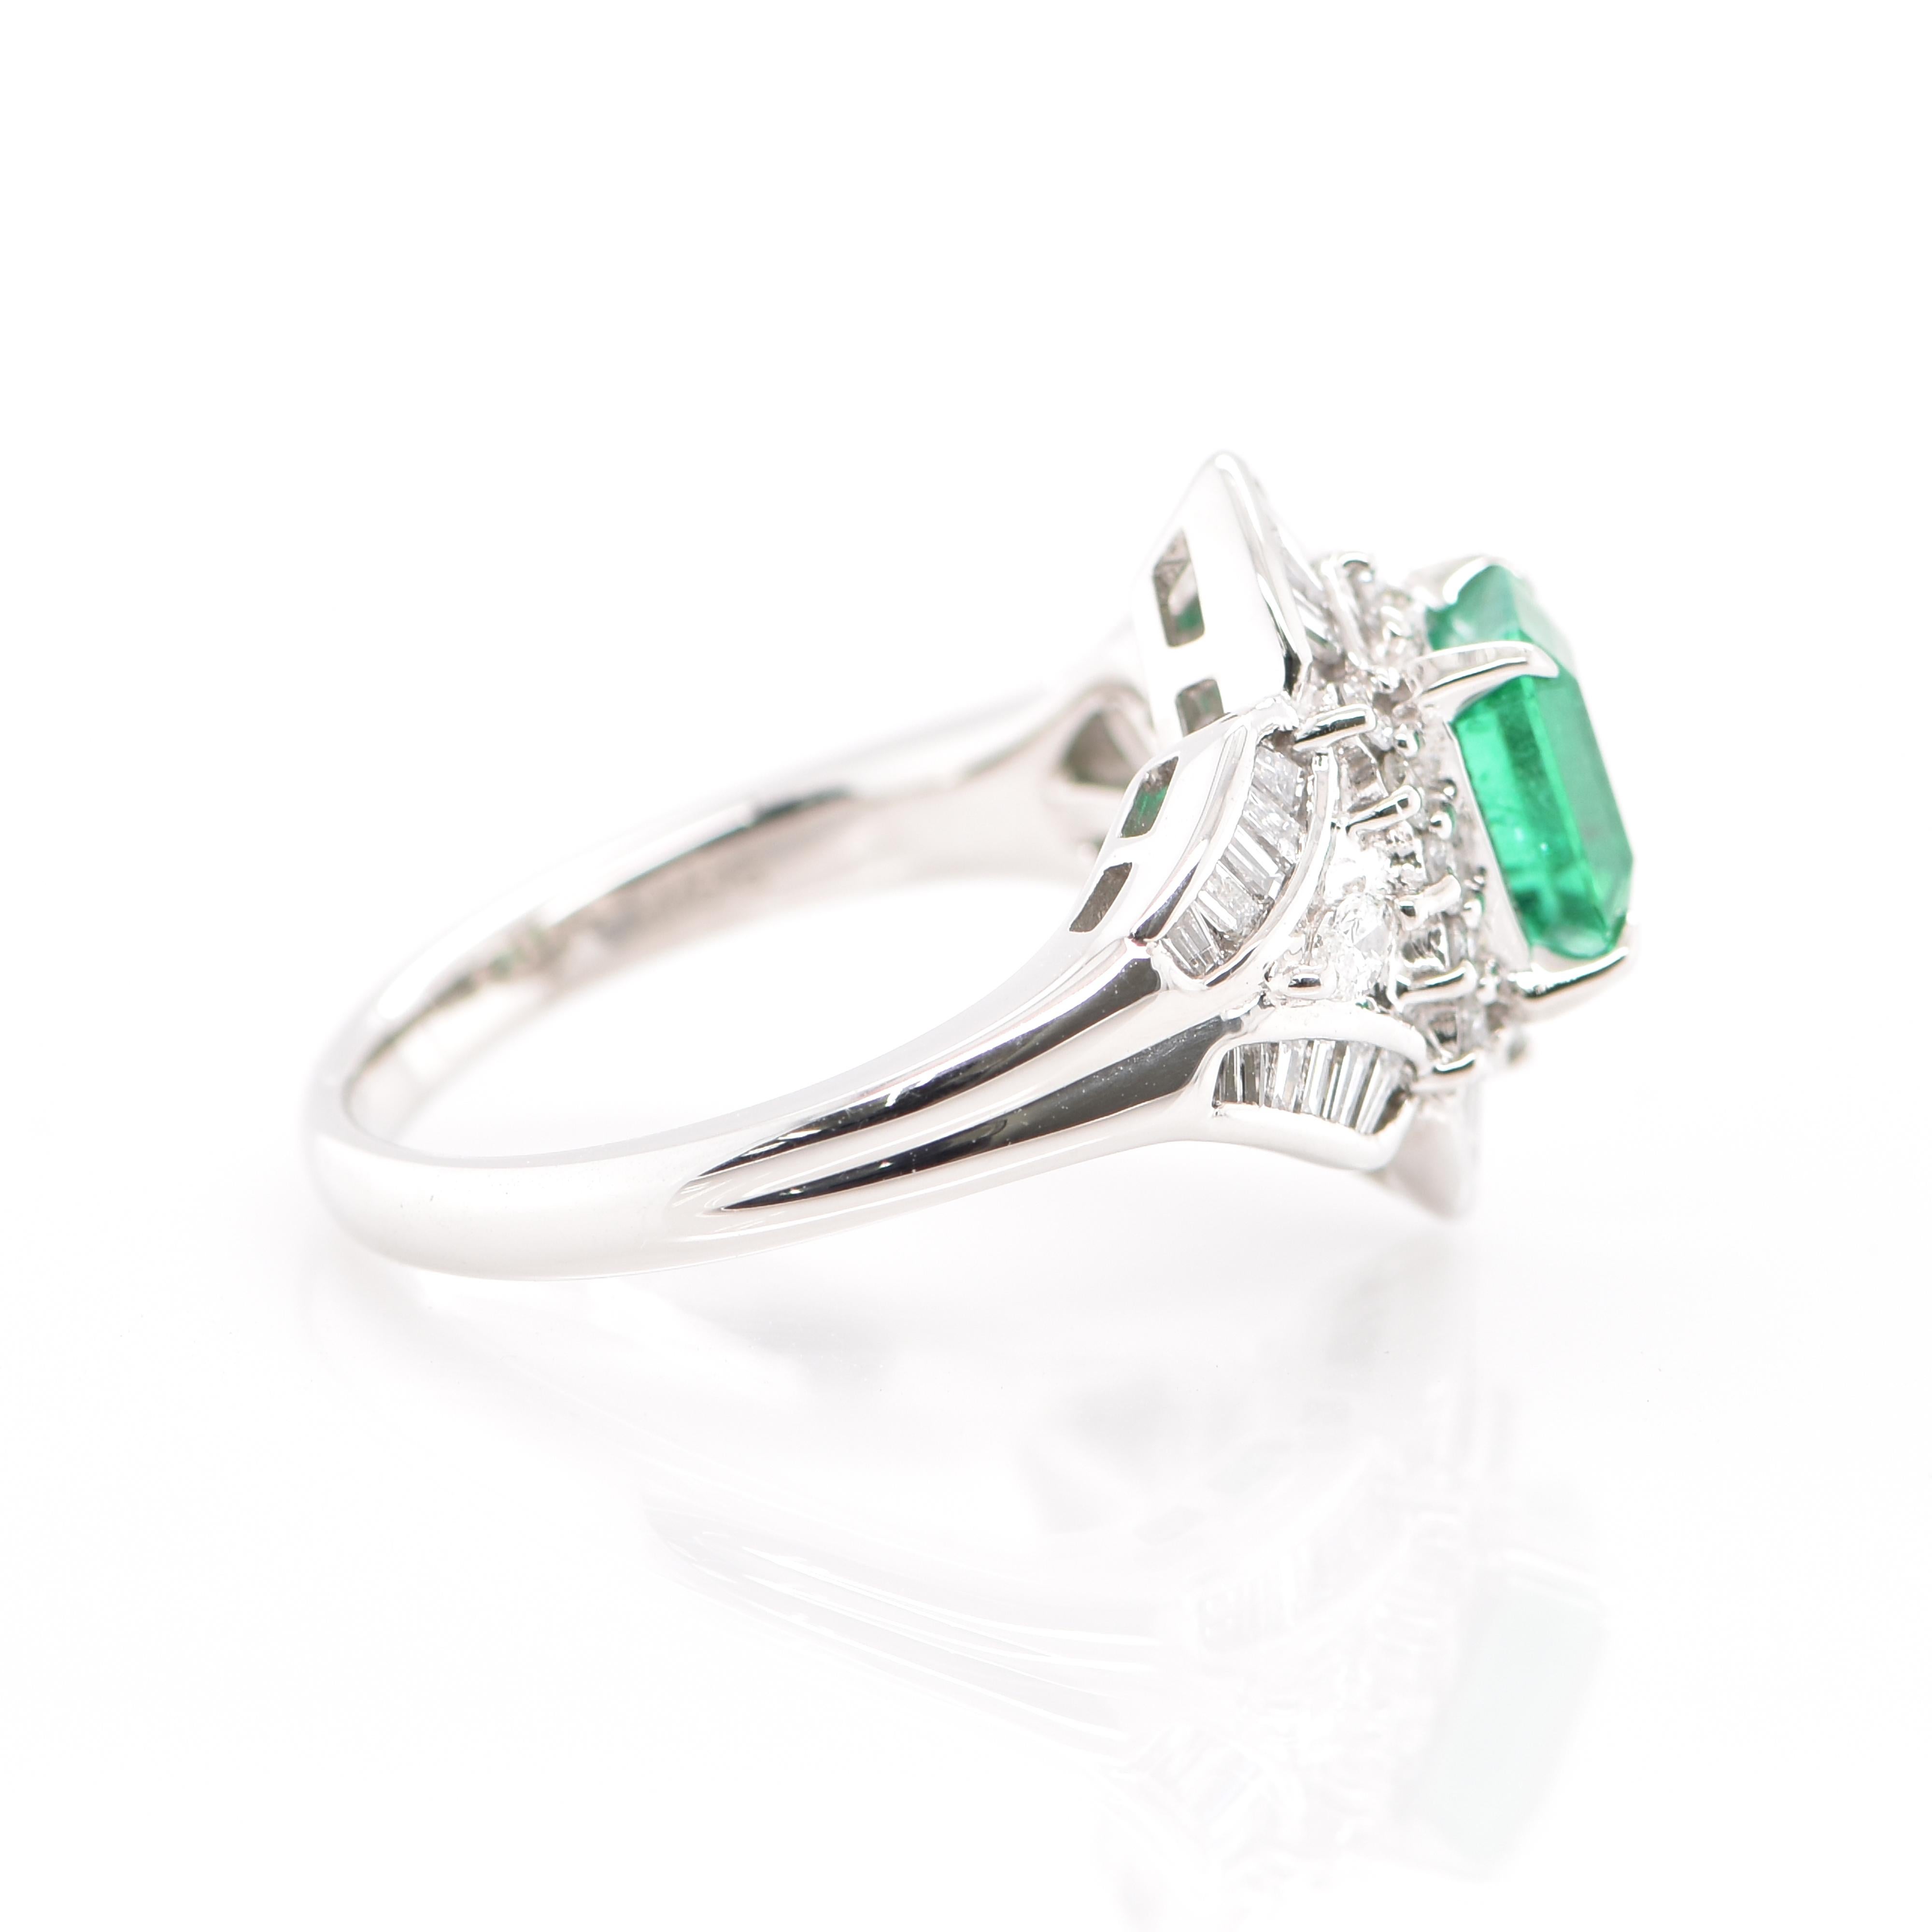 Art Deco Style 1.44 Carat Emerald and Diamond Cocktail Ring Set in Platinum 1